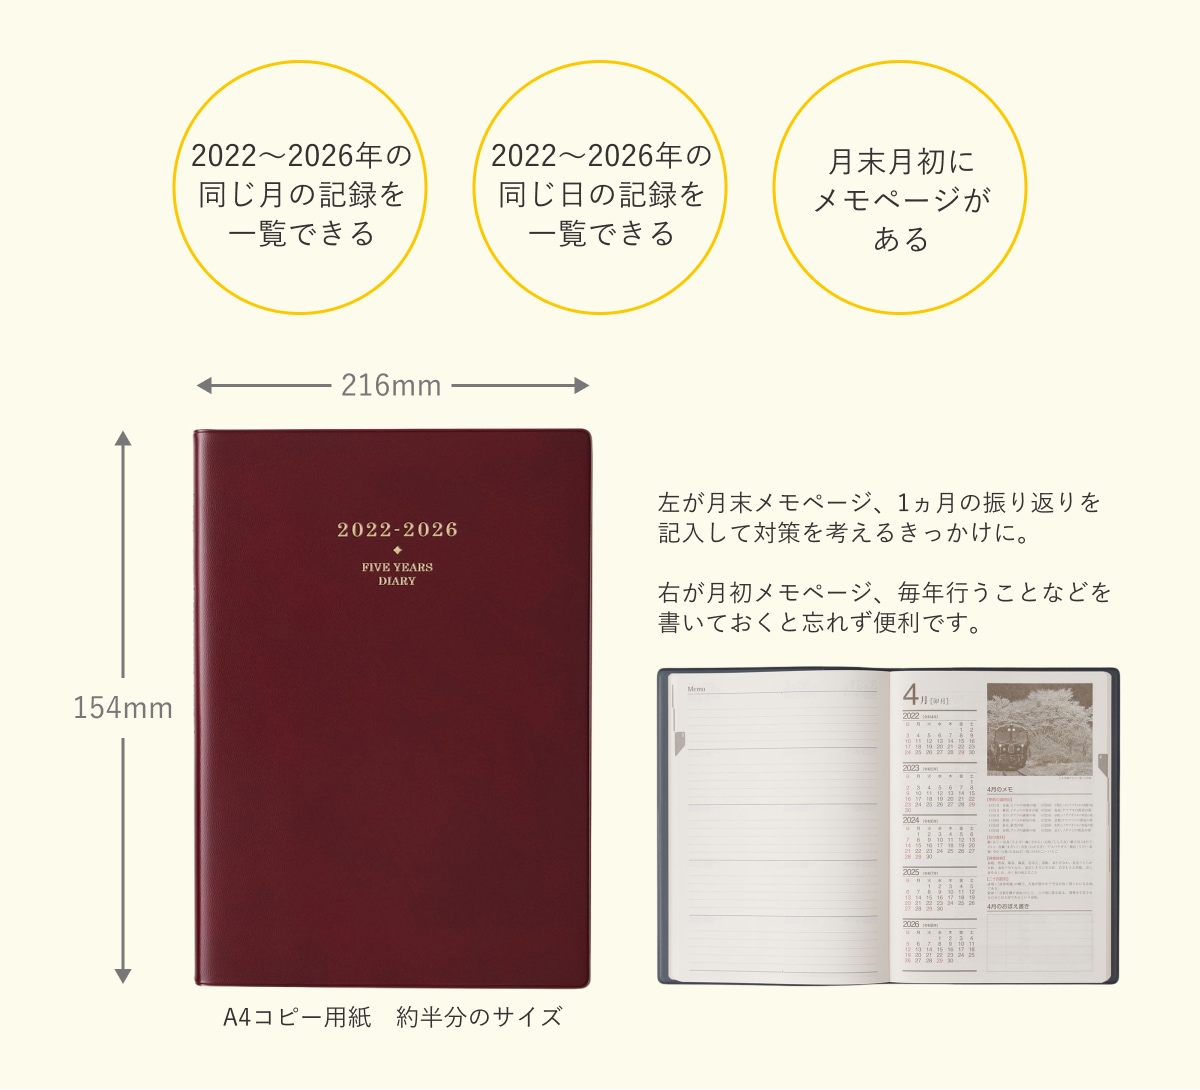 日本産 新品 能率 NOLTY 手帳 2023年 A5 メモリー3年日誌 ピンク